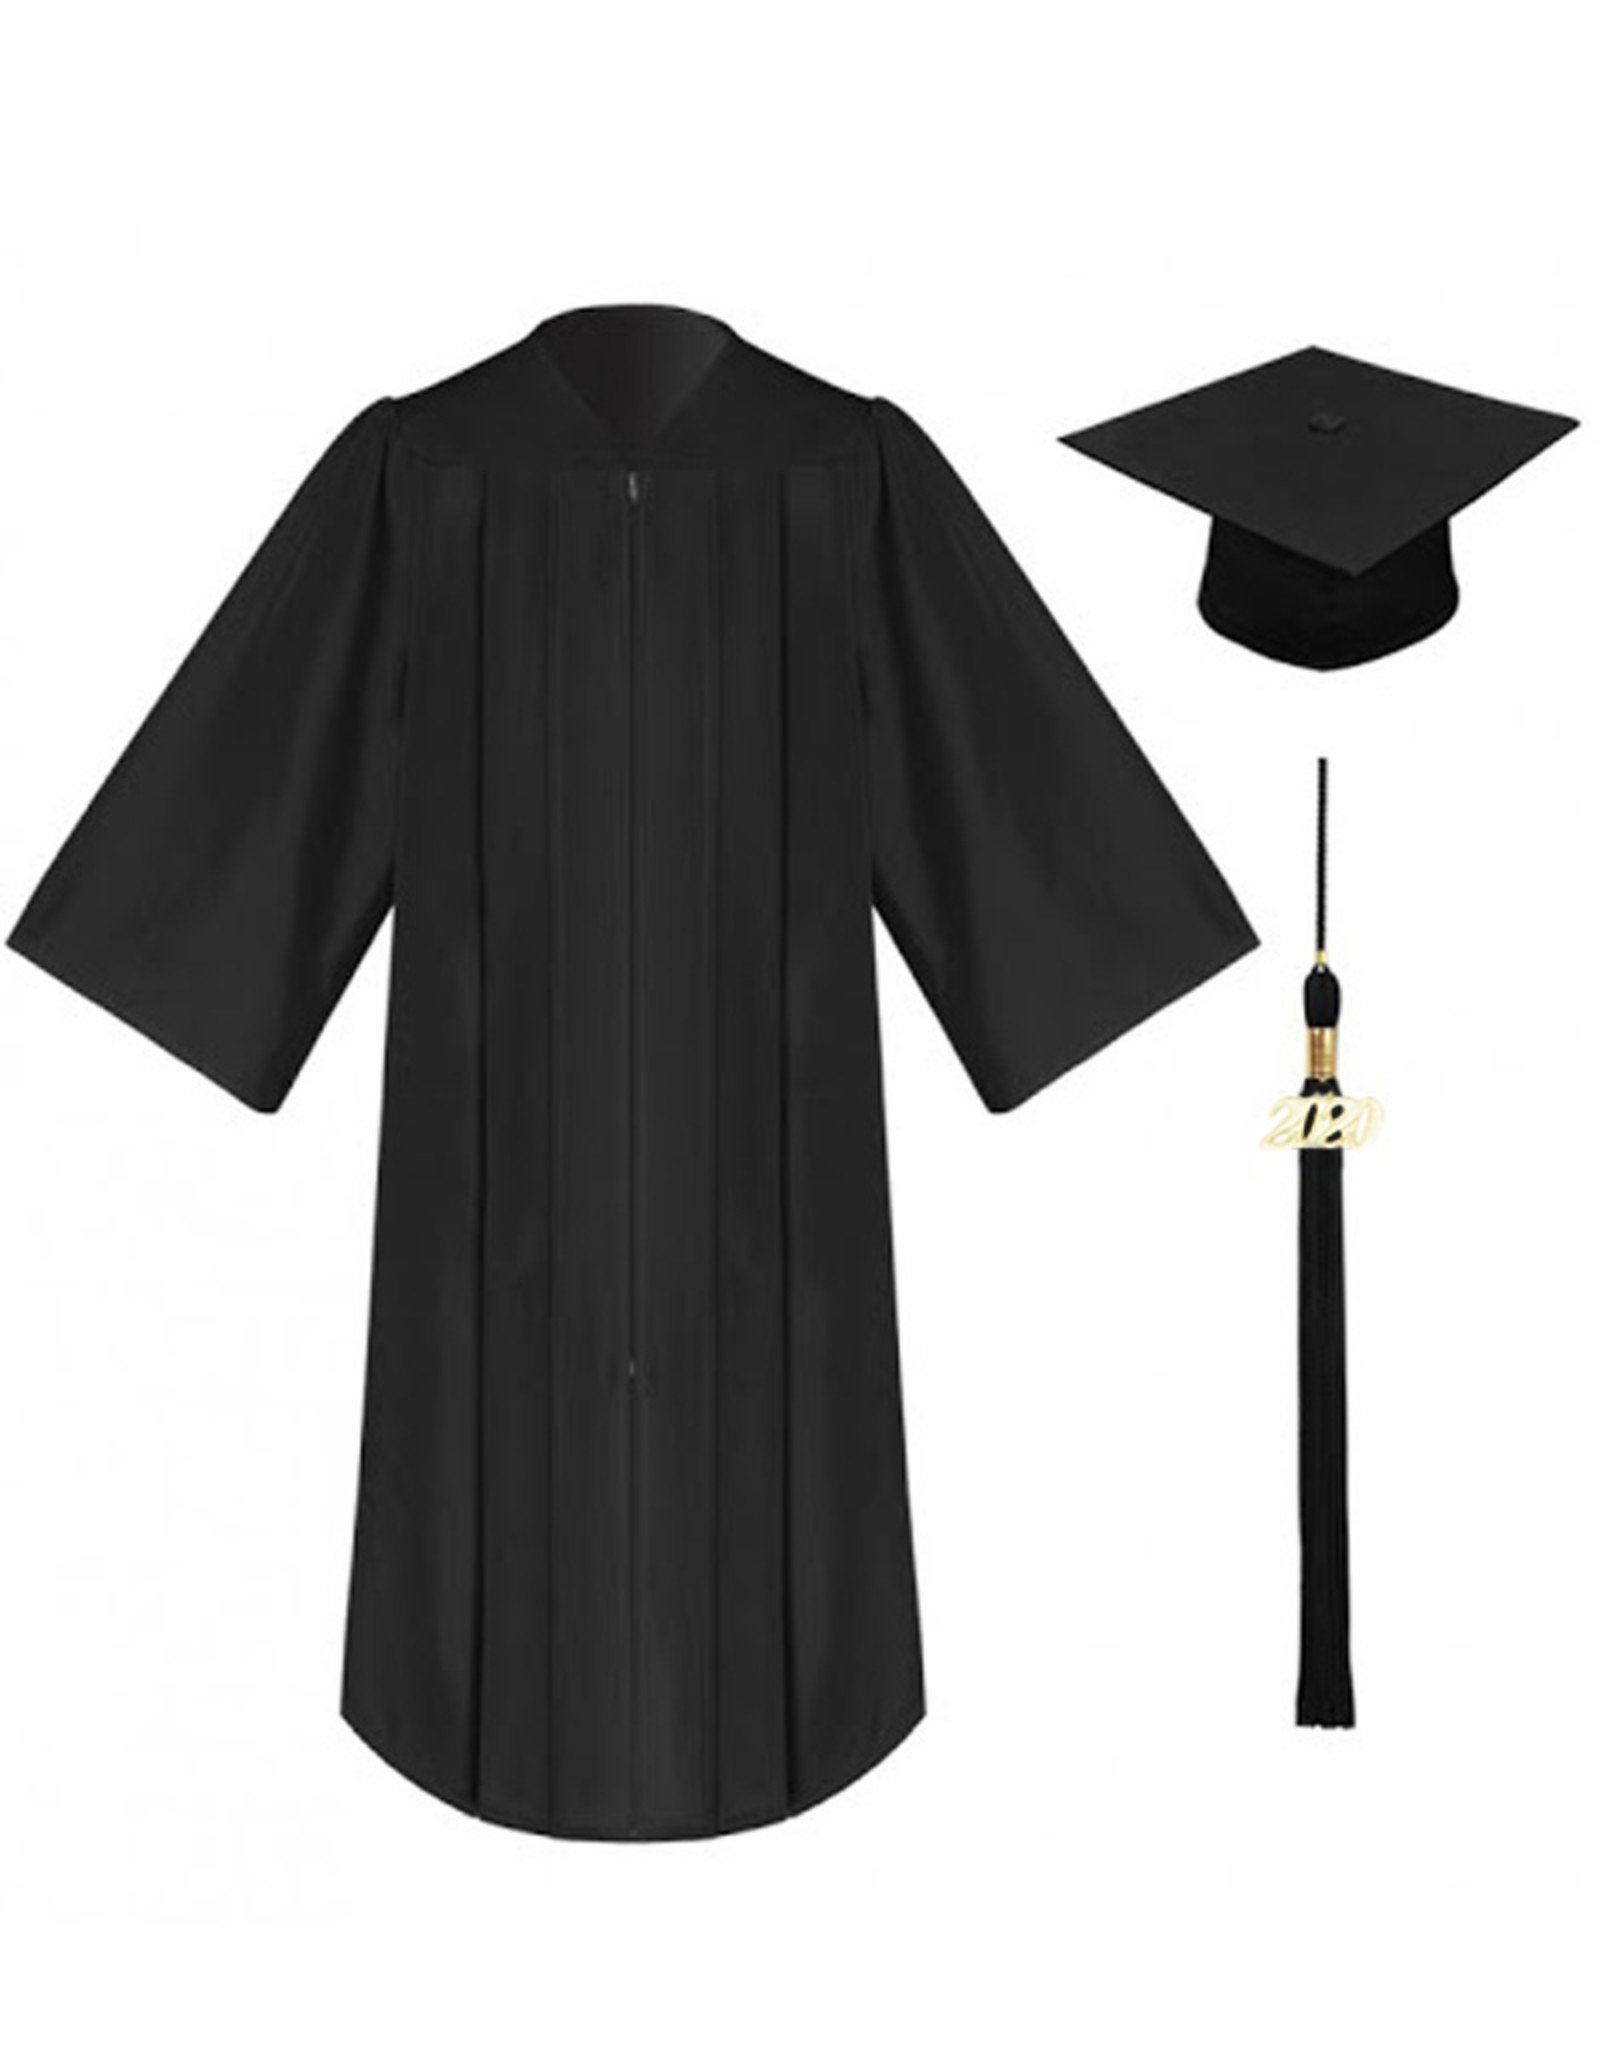 Bachelors Deluxe Cap & Gown | Legacy School & Career Apparel